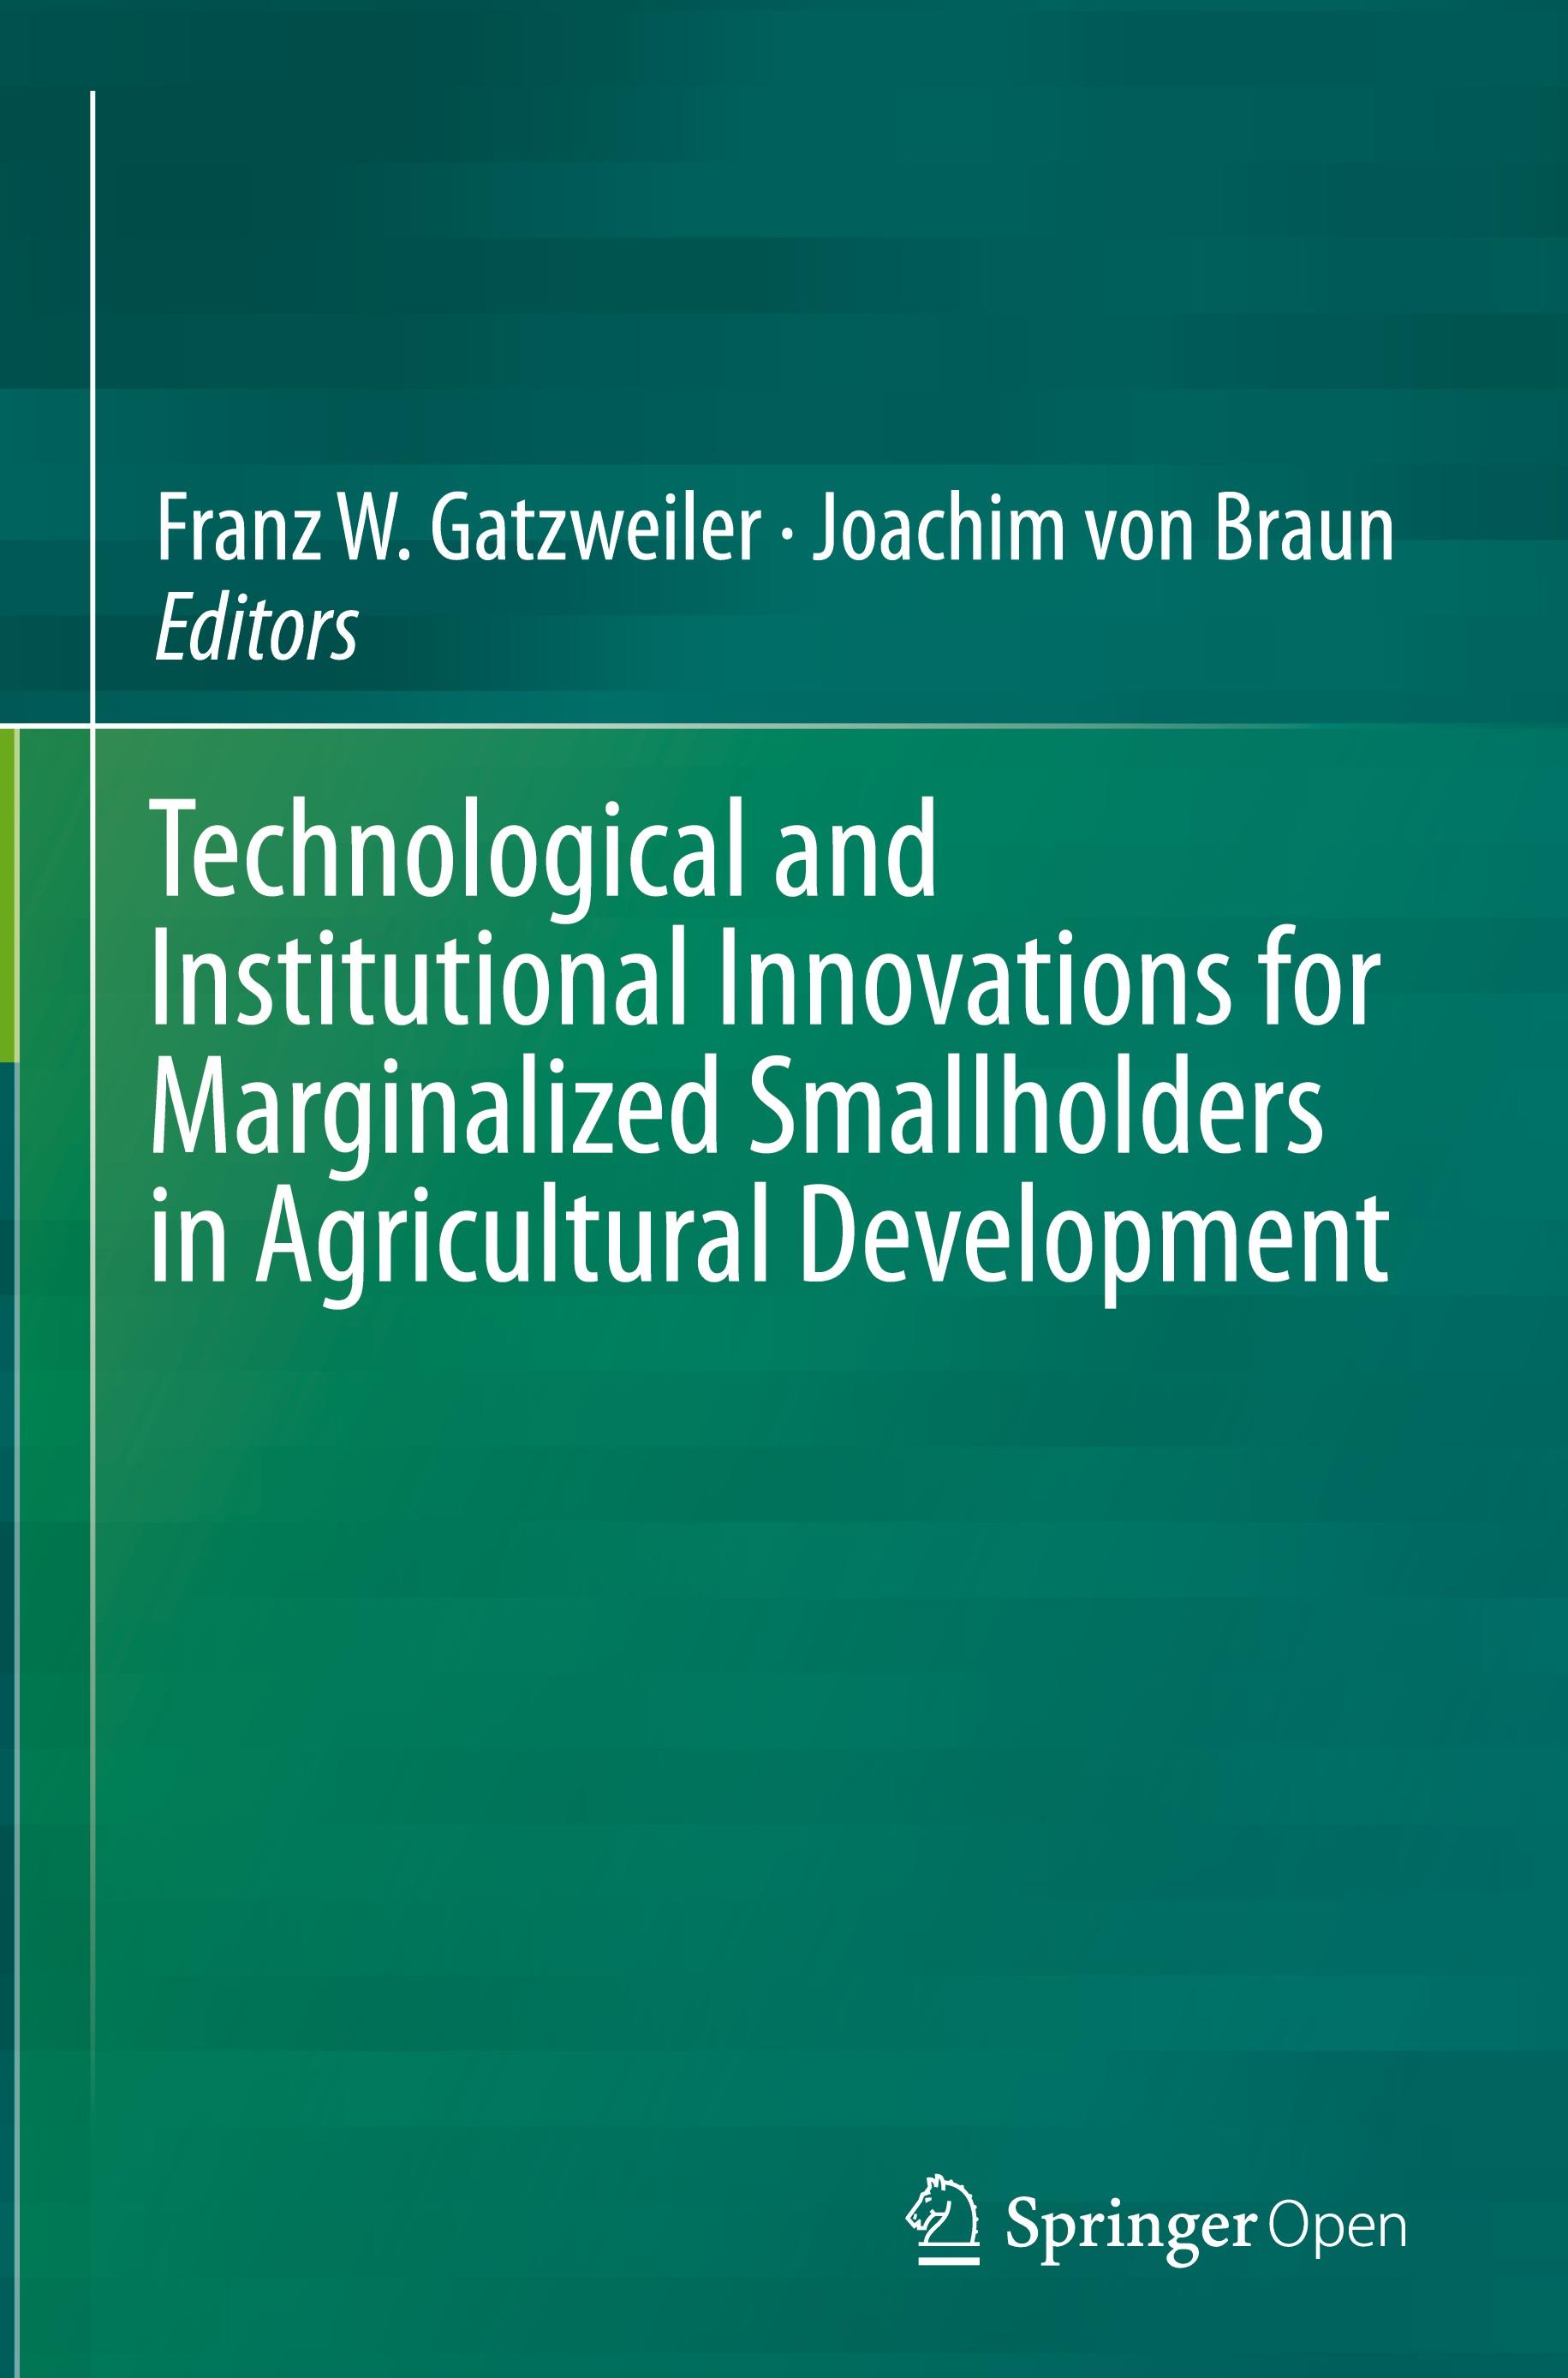 Technological and Institutional Innovations for Marginalized Smallholders in Agricultural Development - Gatzweiler, Franz W.|Braun, Joachim von